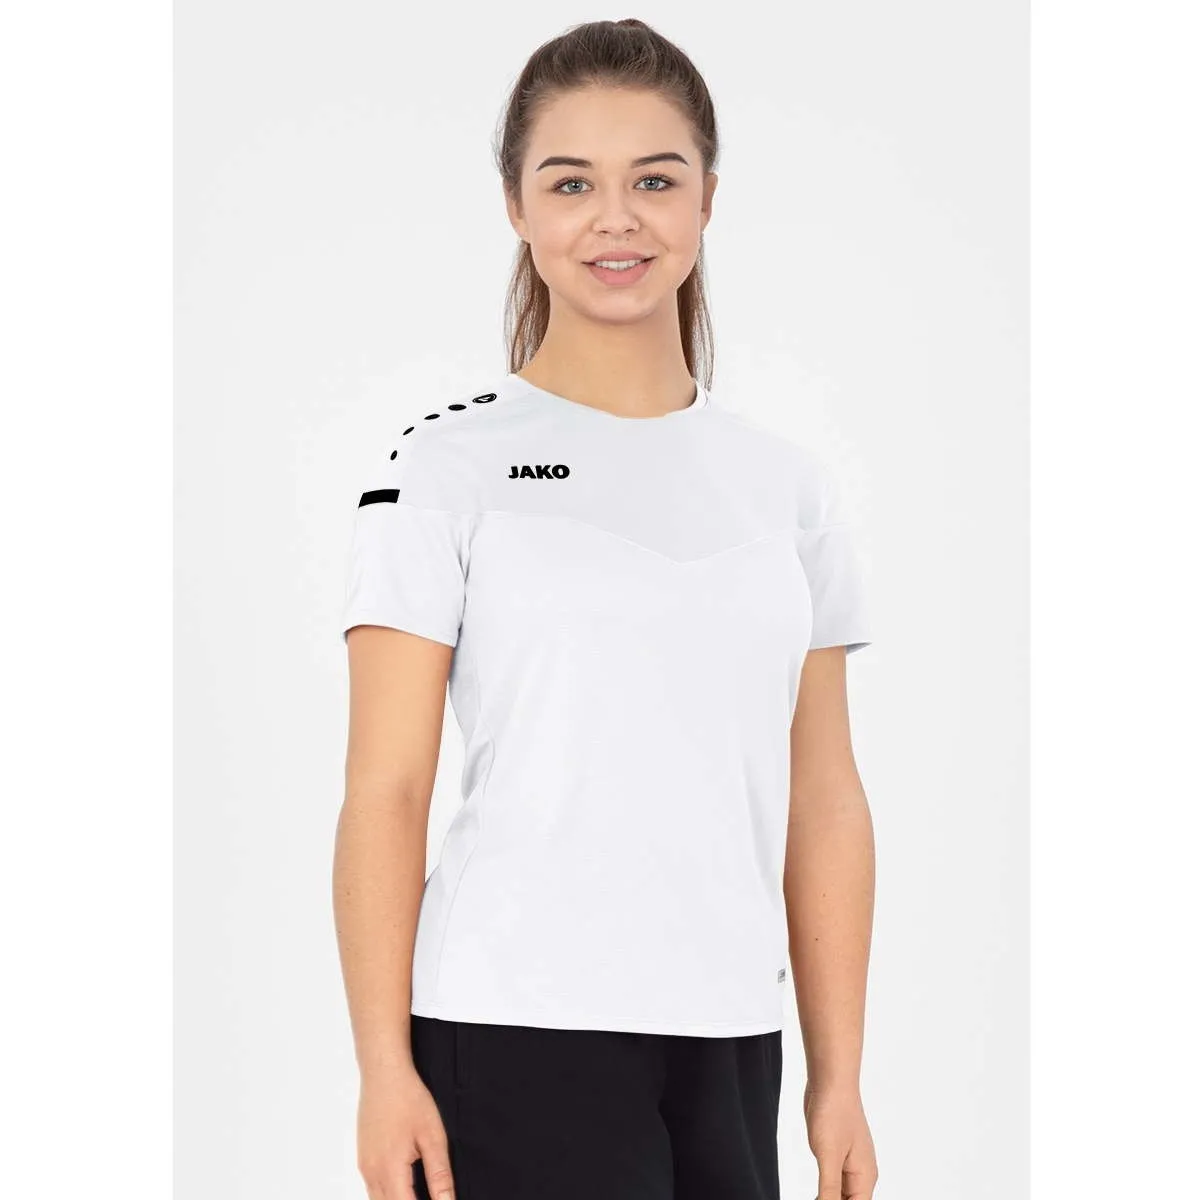 Jako T-shirt Champ 2.0 dark white for women, men and children